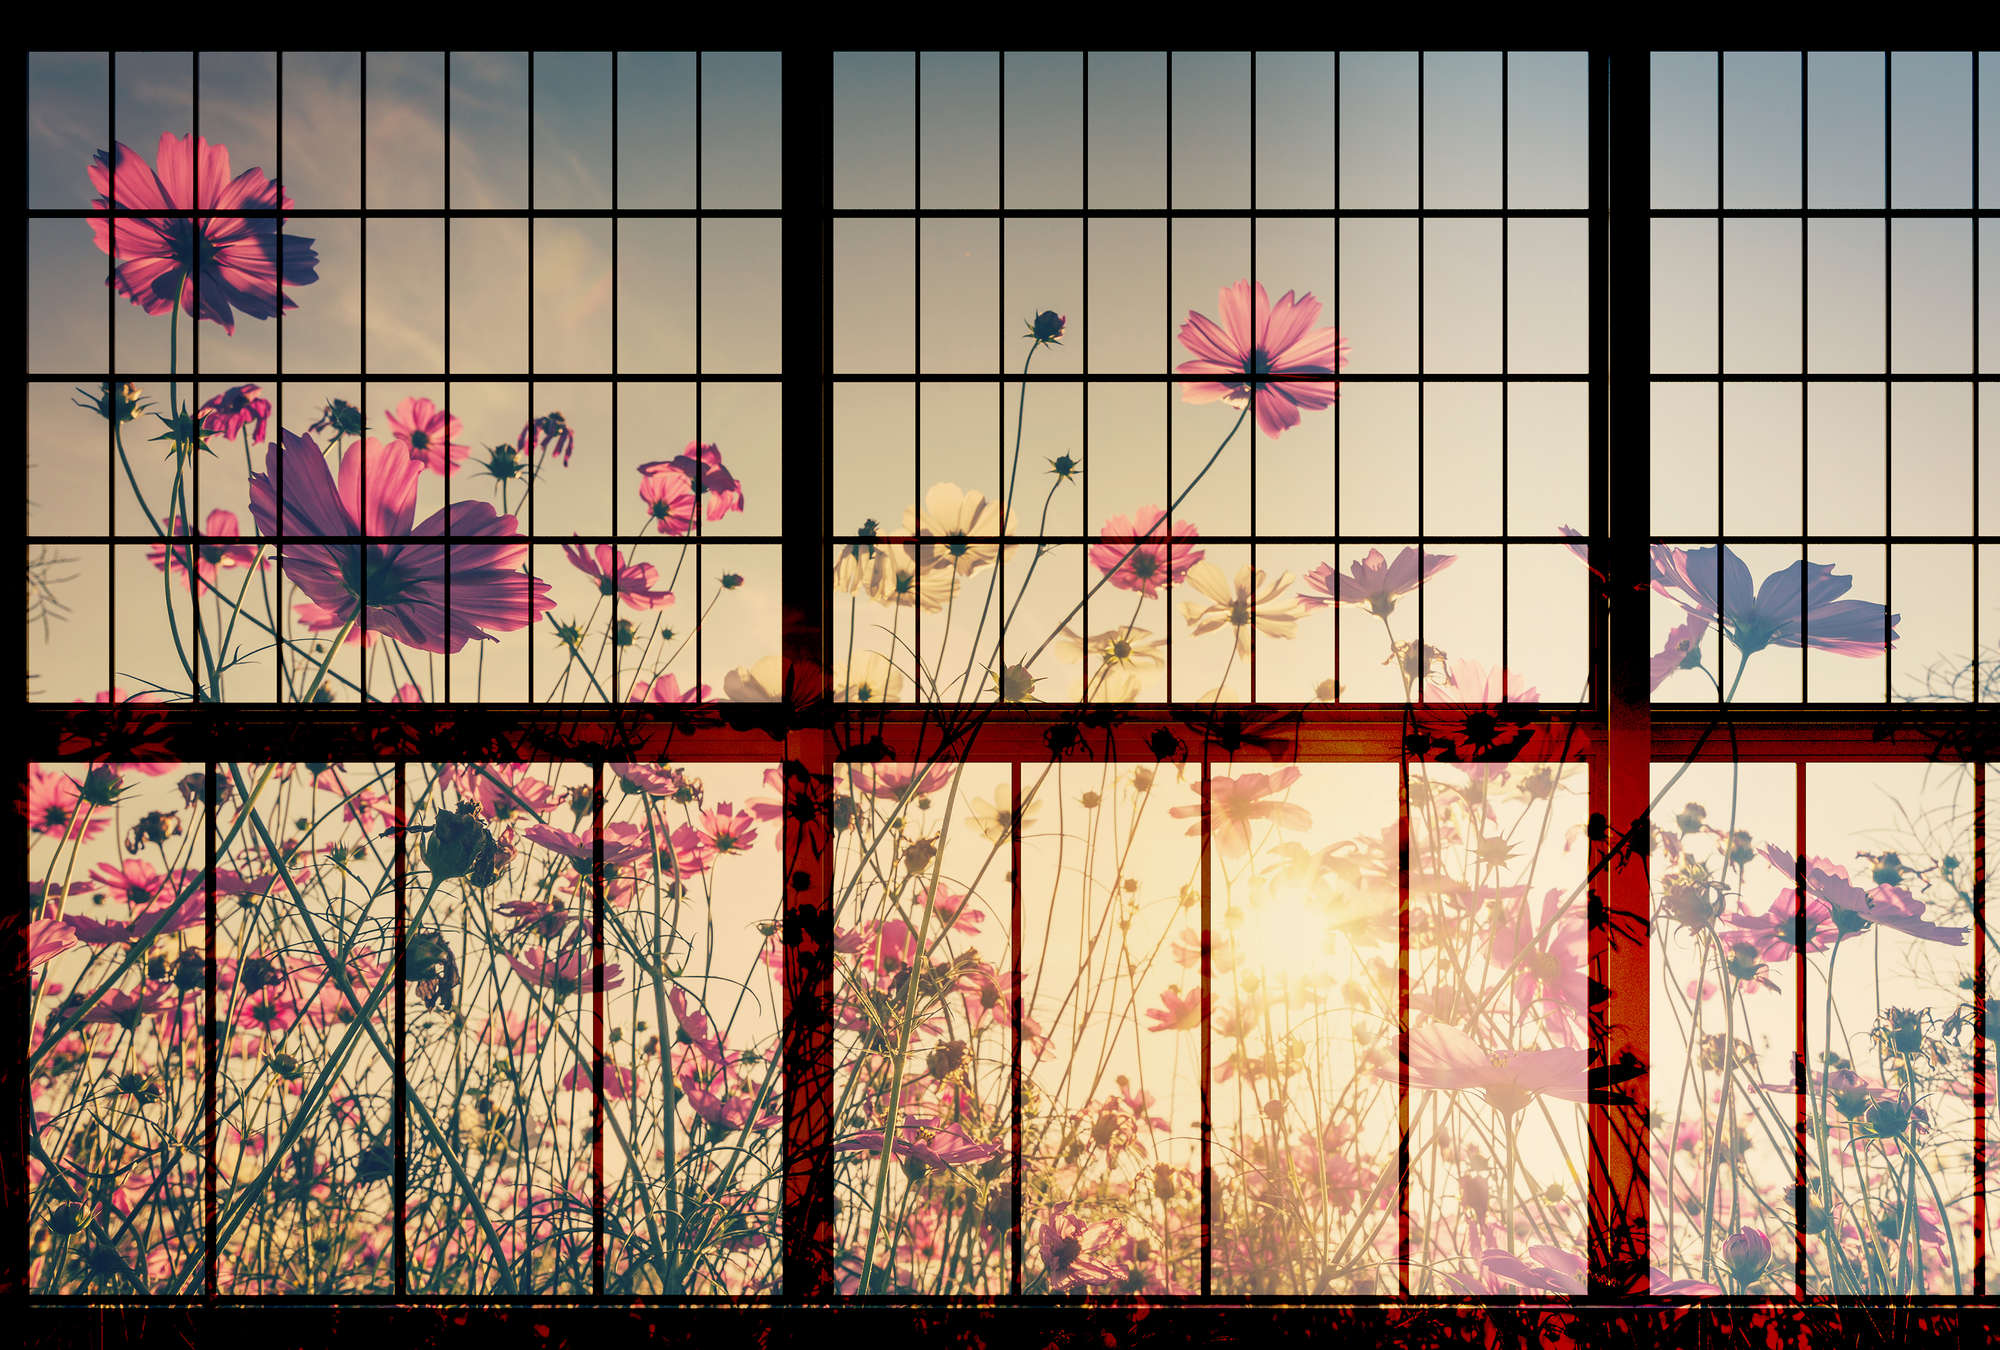             Meadow 1 - Muntin Window Wallpaper with Flower Meadow - Green, Pink | Matt Smooth Non-woven
        